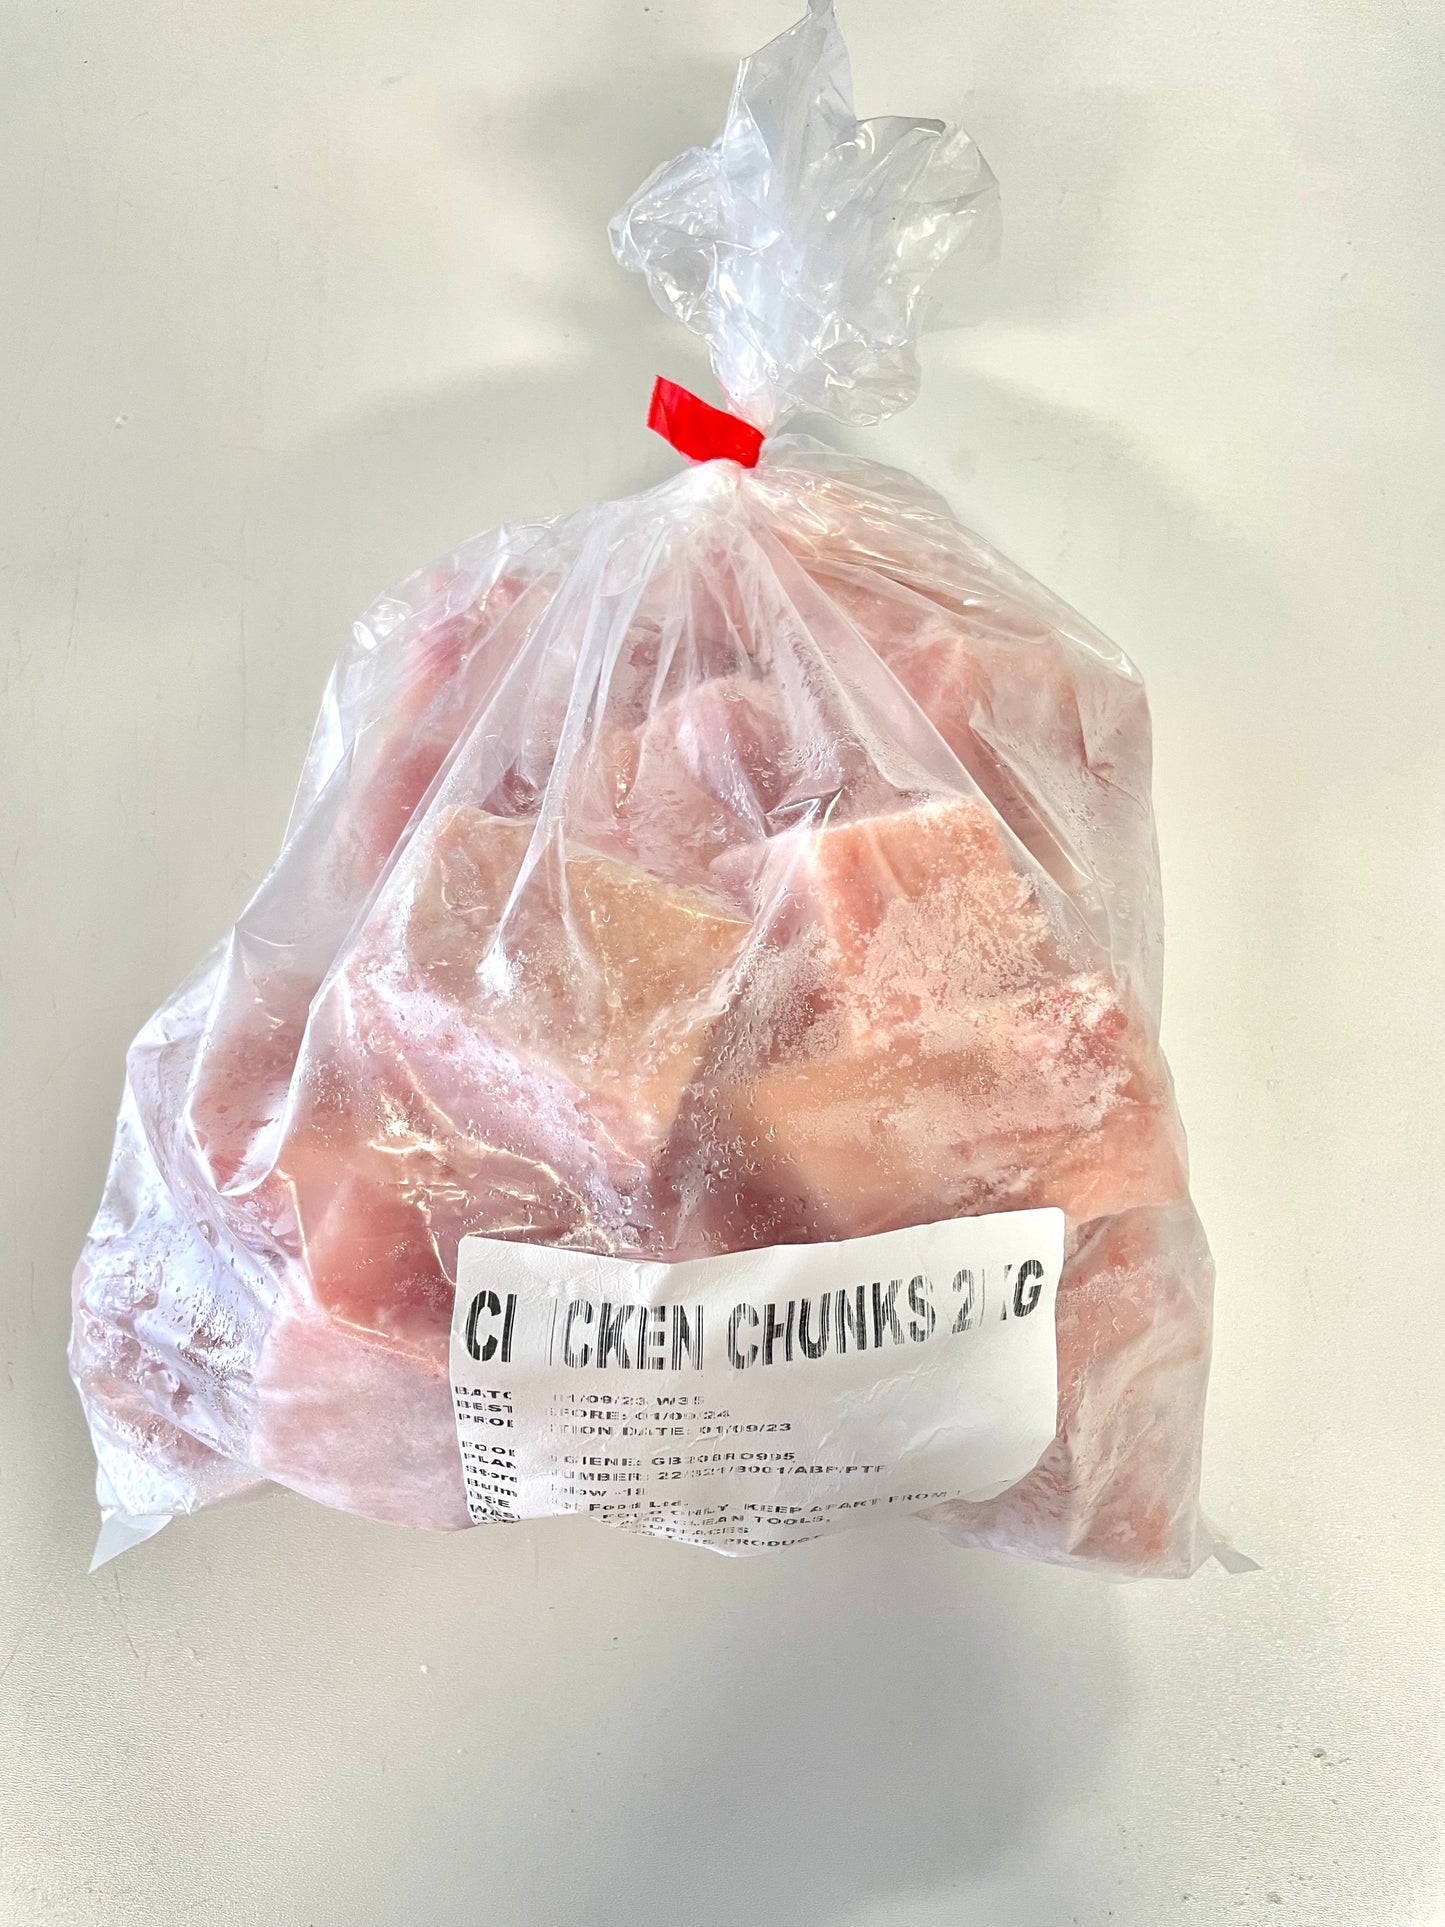 Chicken chunks 2kg